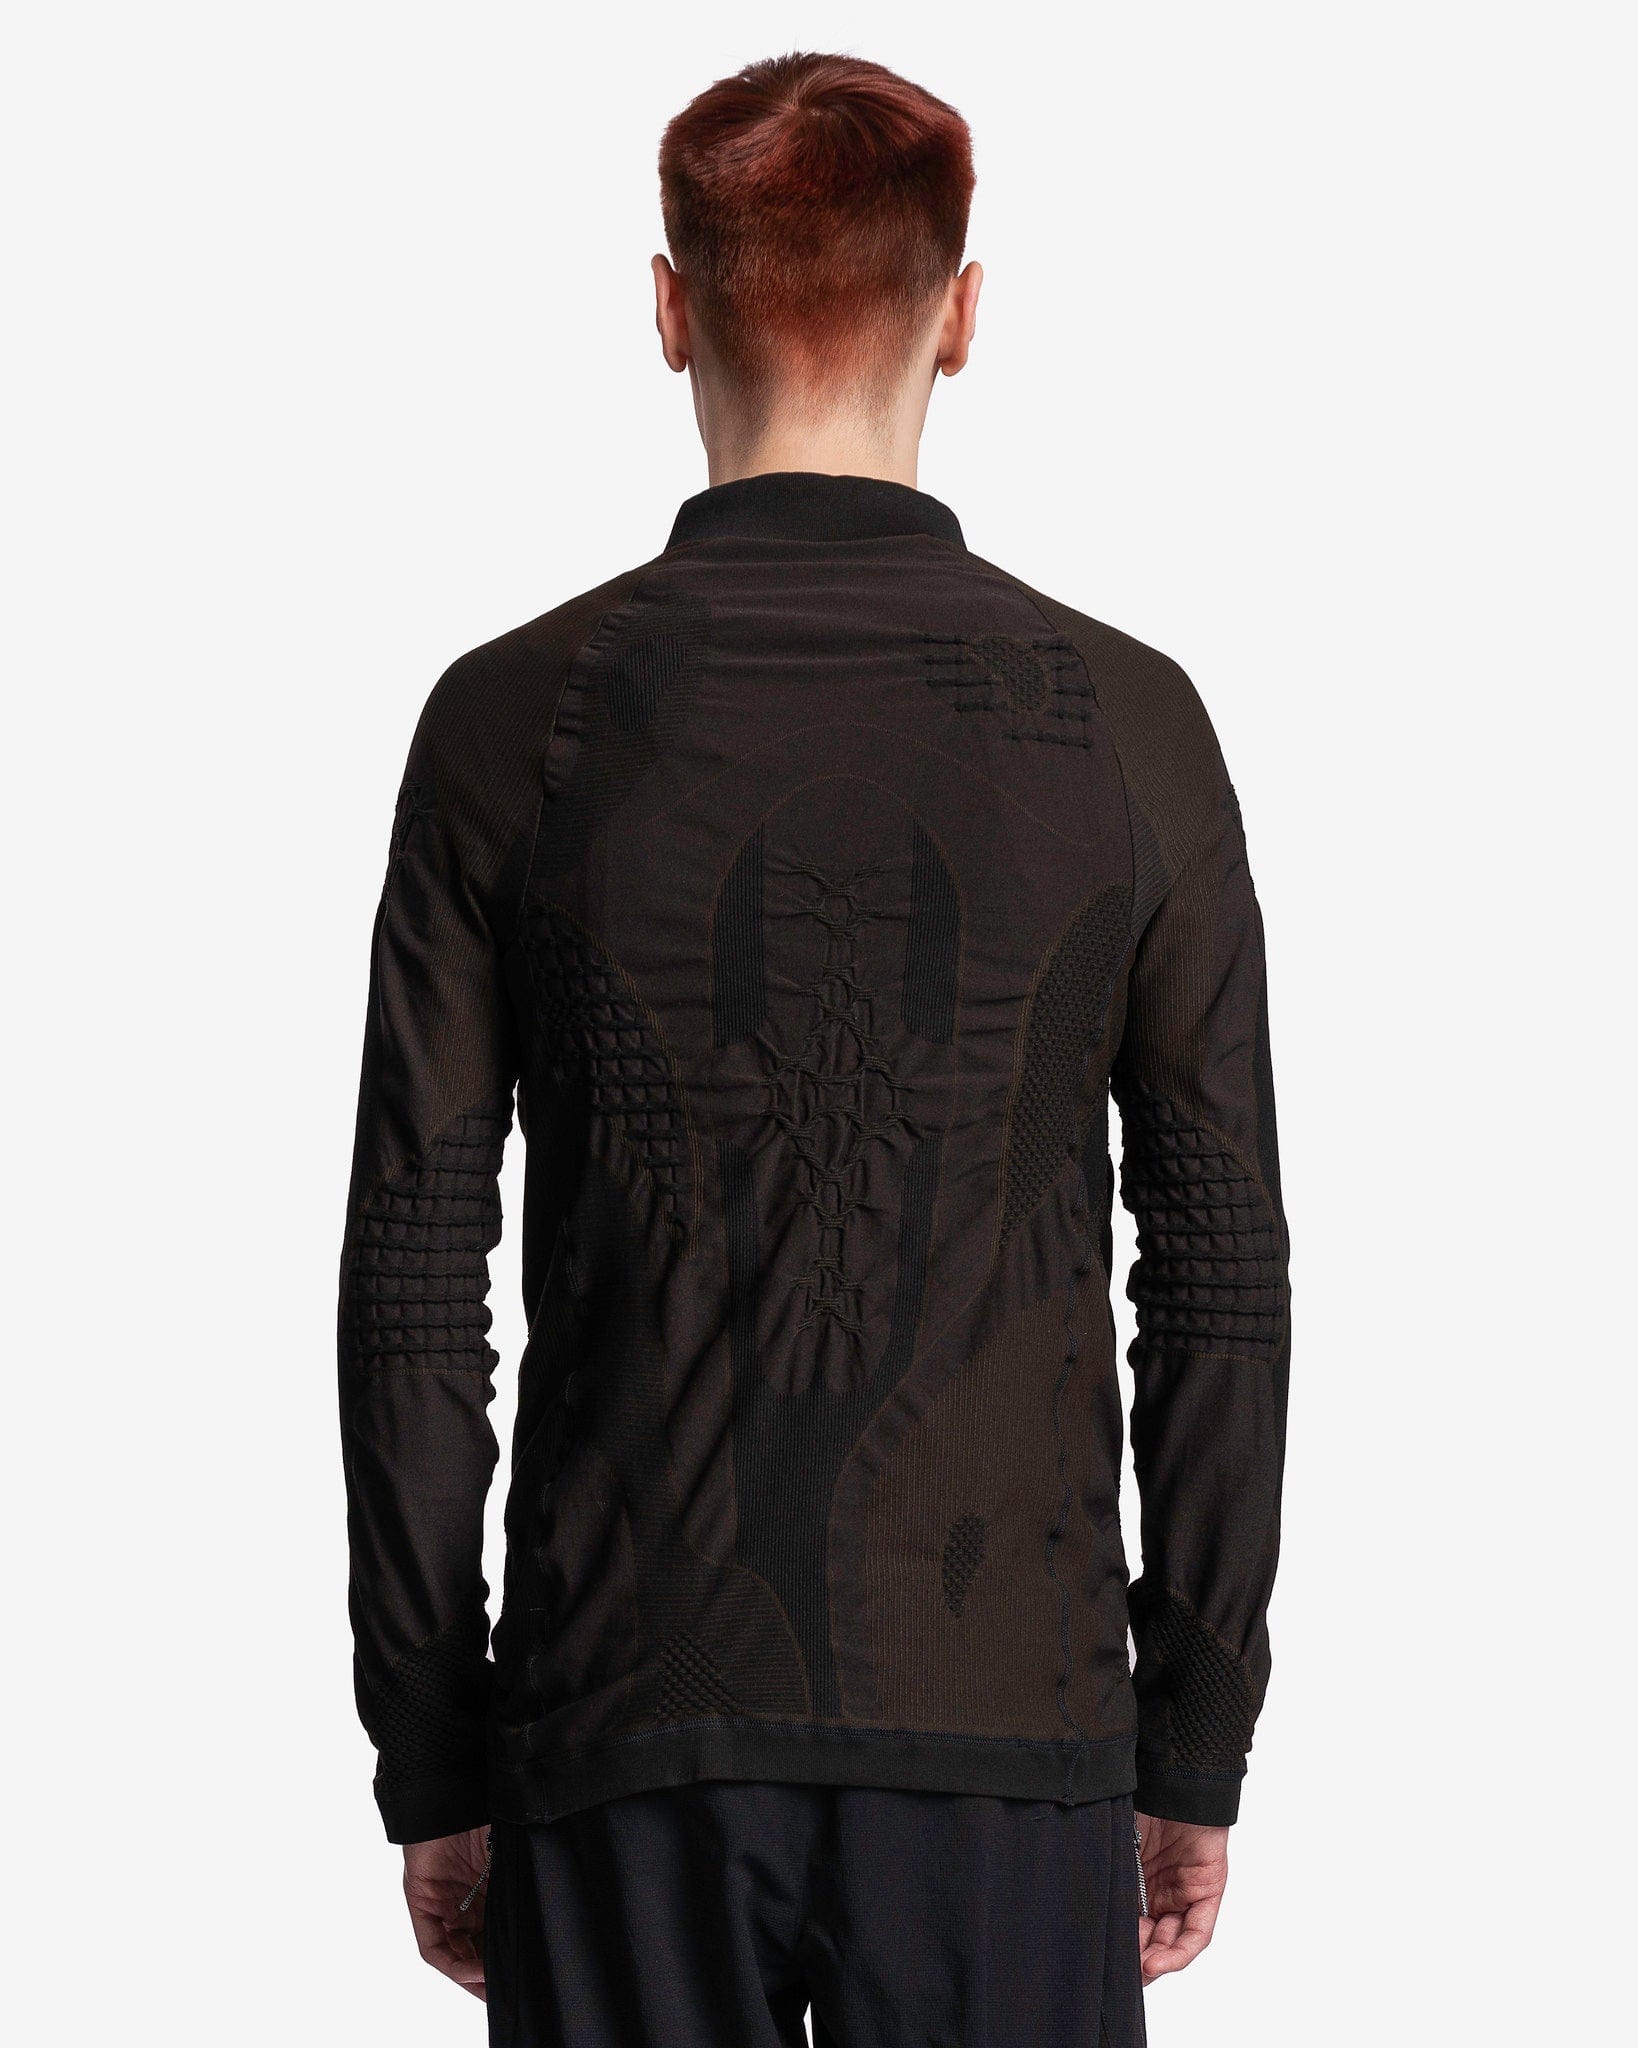 Roa Men's Sweater Half-Zip 3D Knit in Nero/Marrone